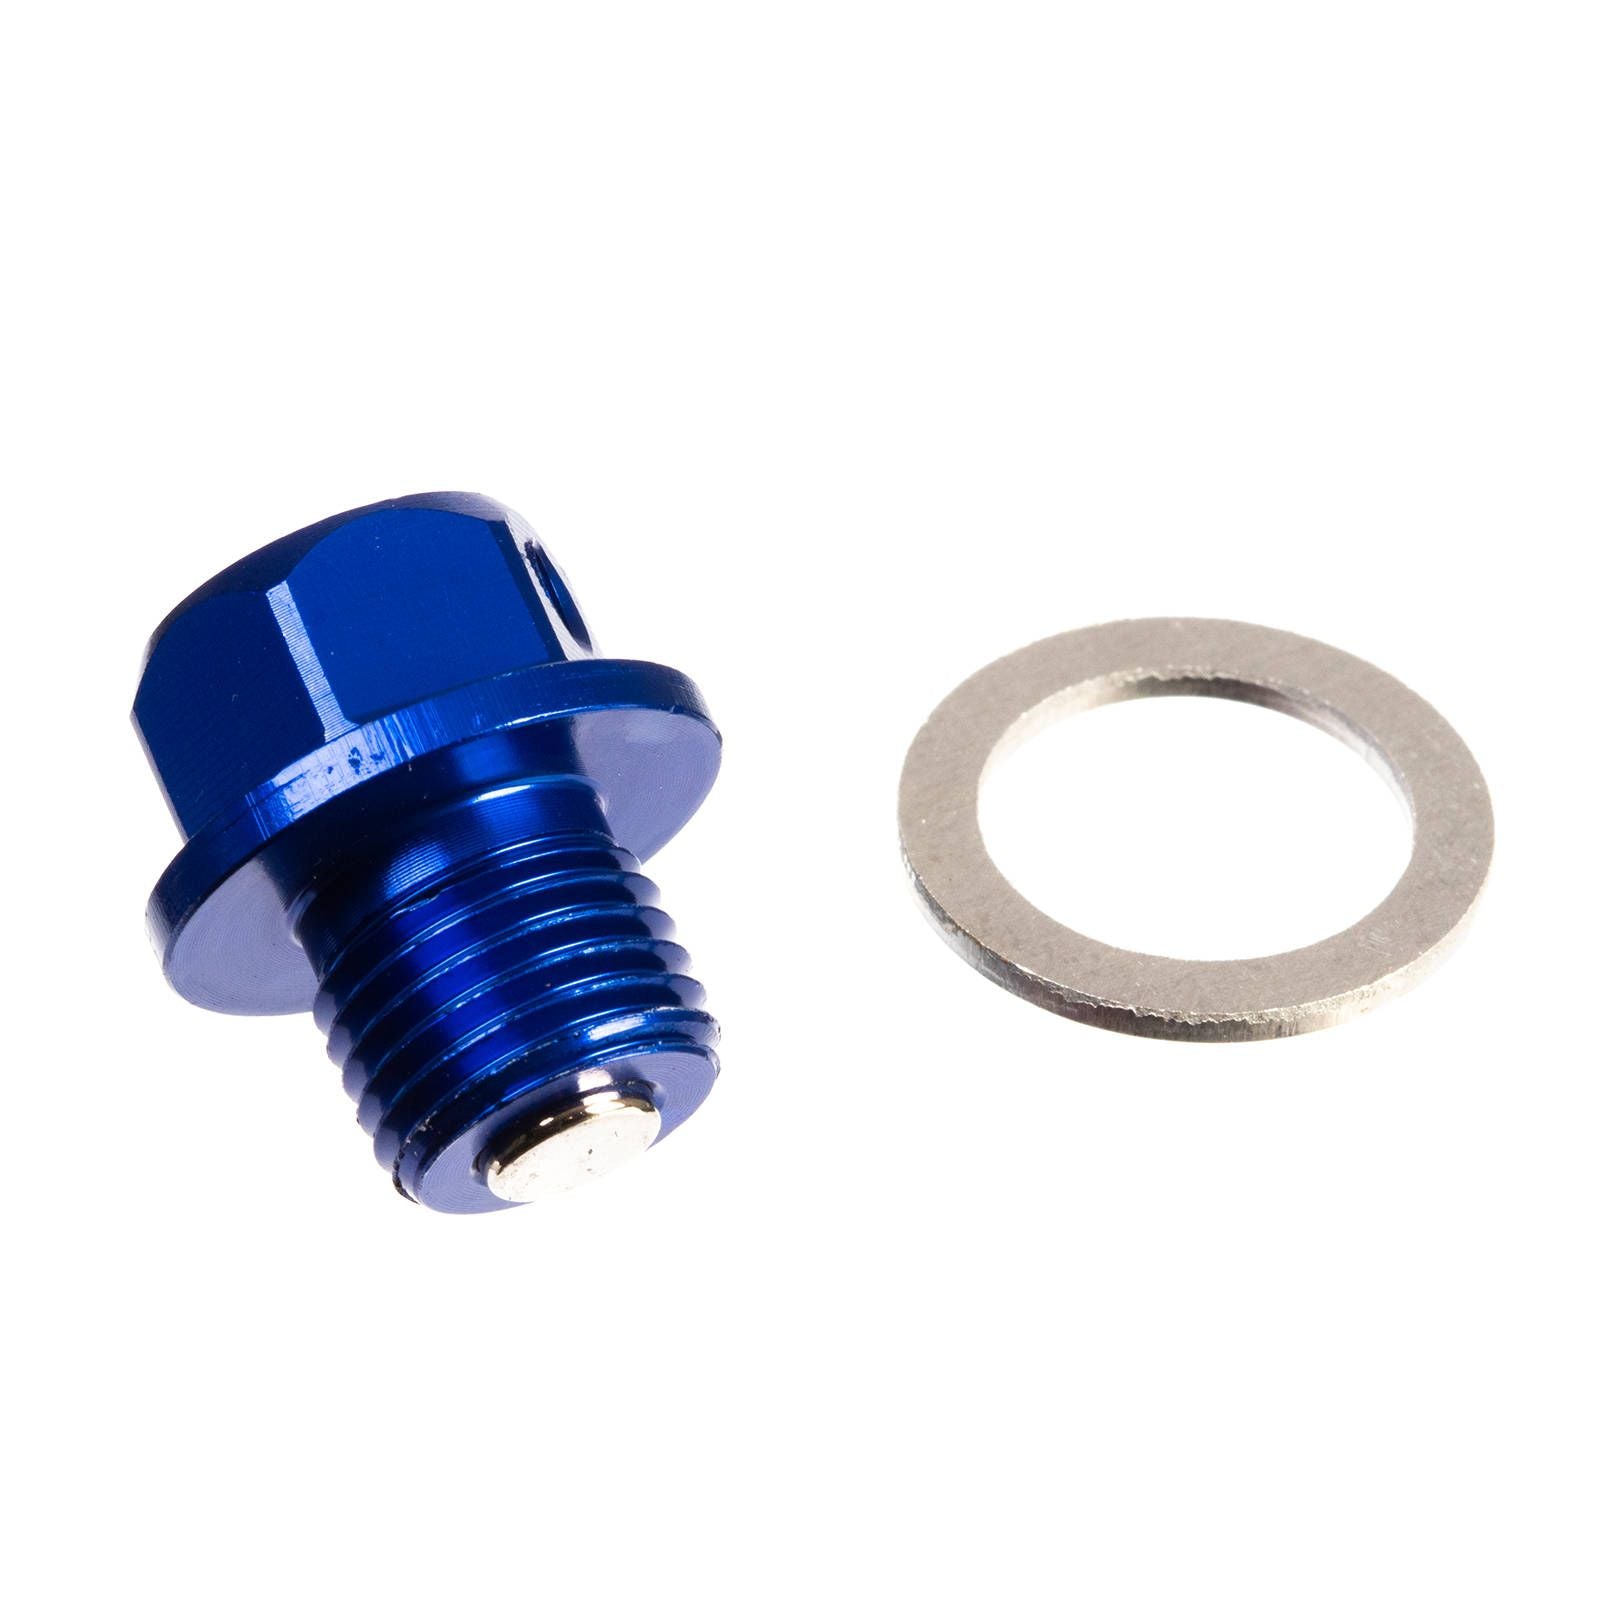 New WHITES Magnetic Sump Plug M12 x 10 x 1.25 - Blue #WPMDP1210125B